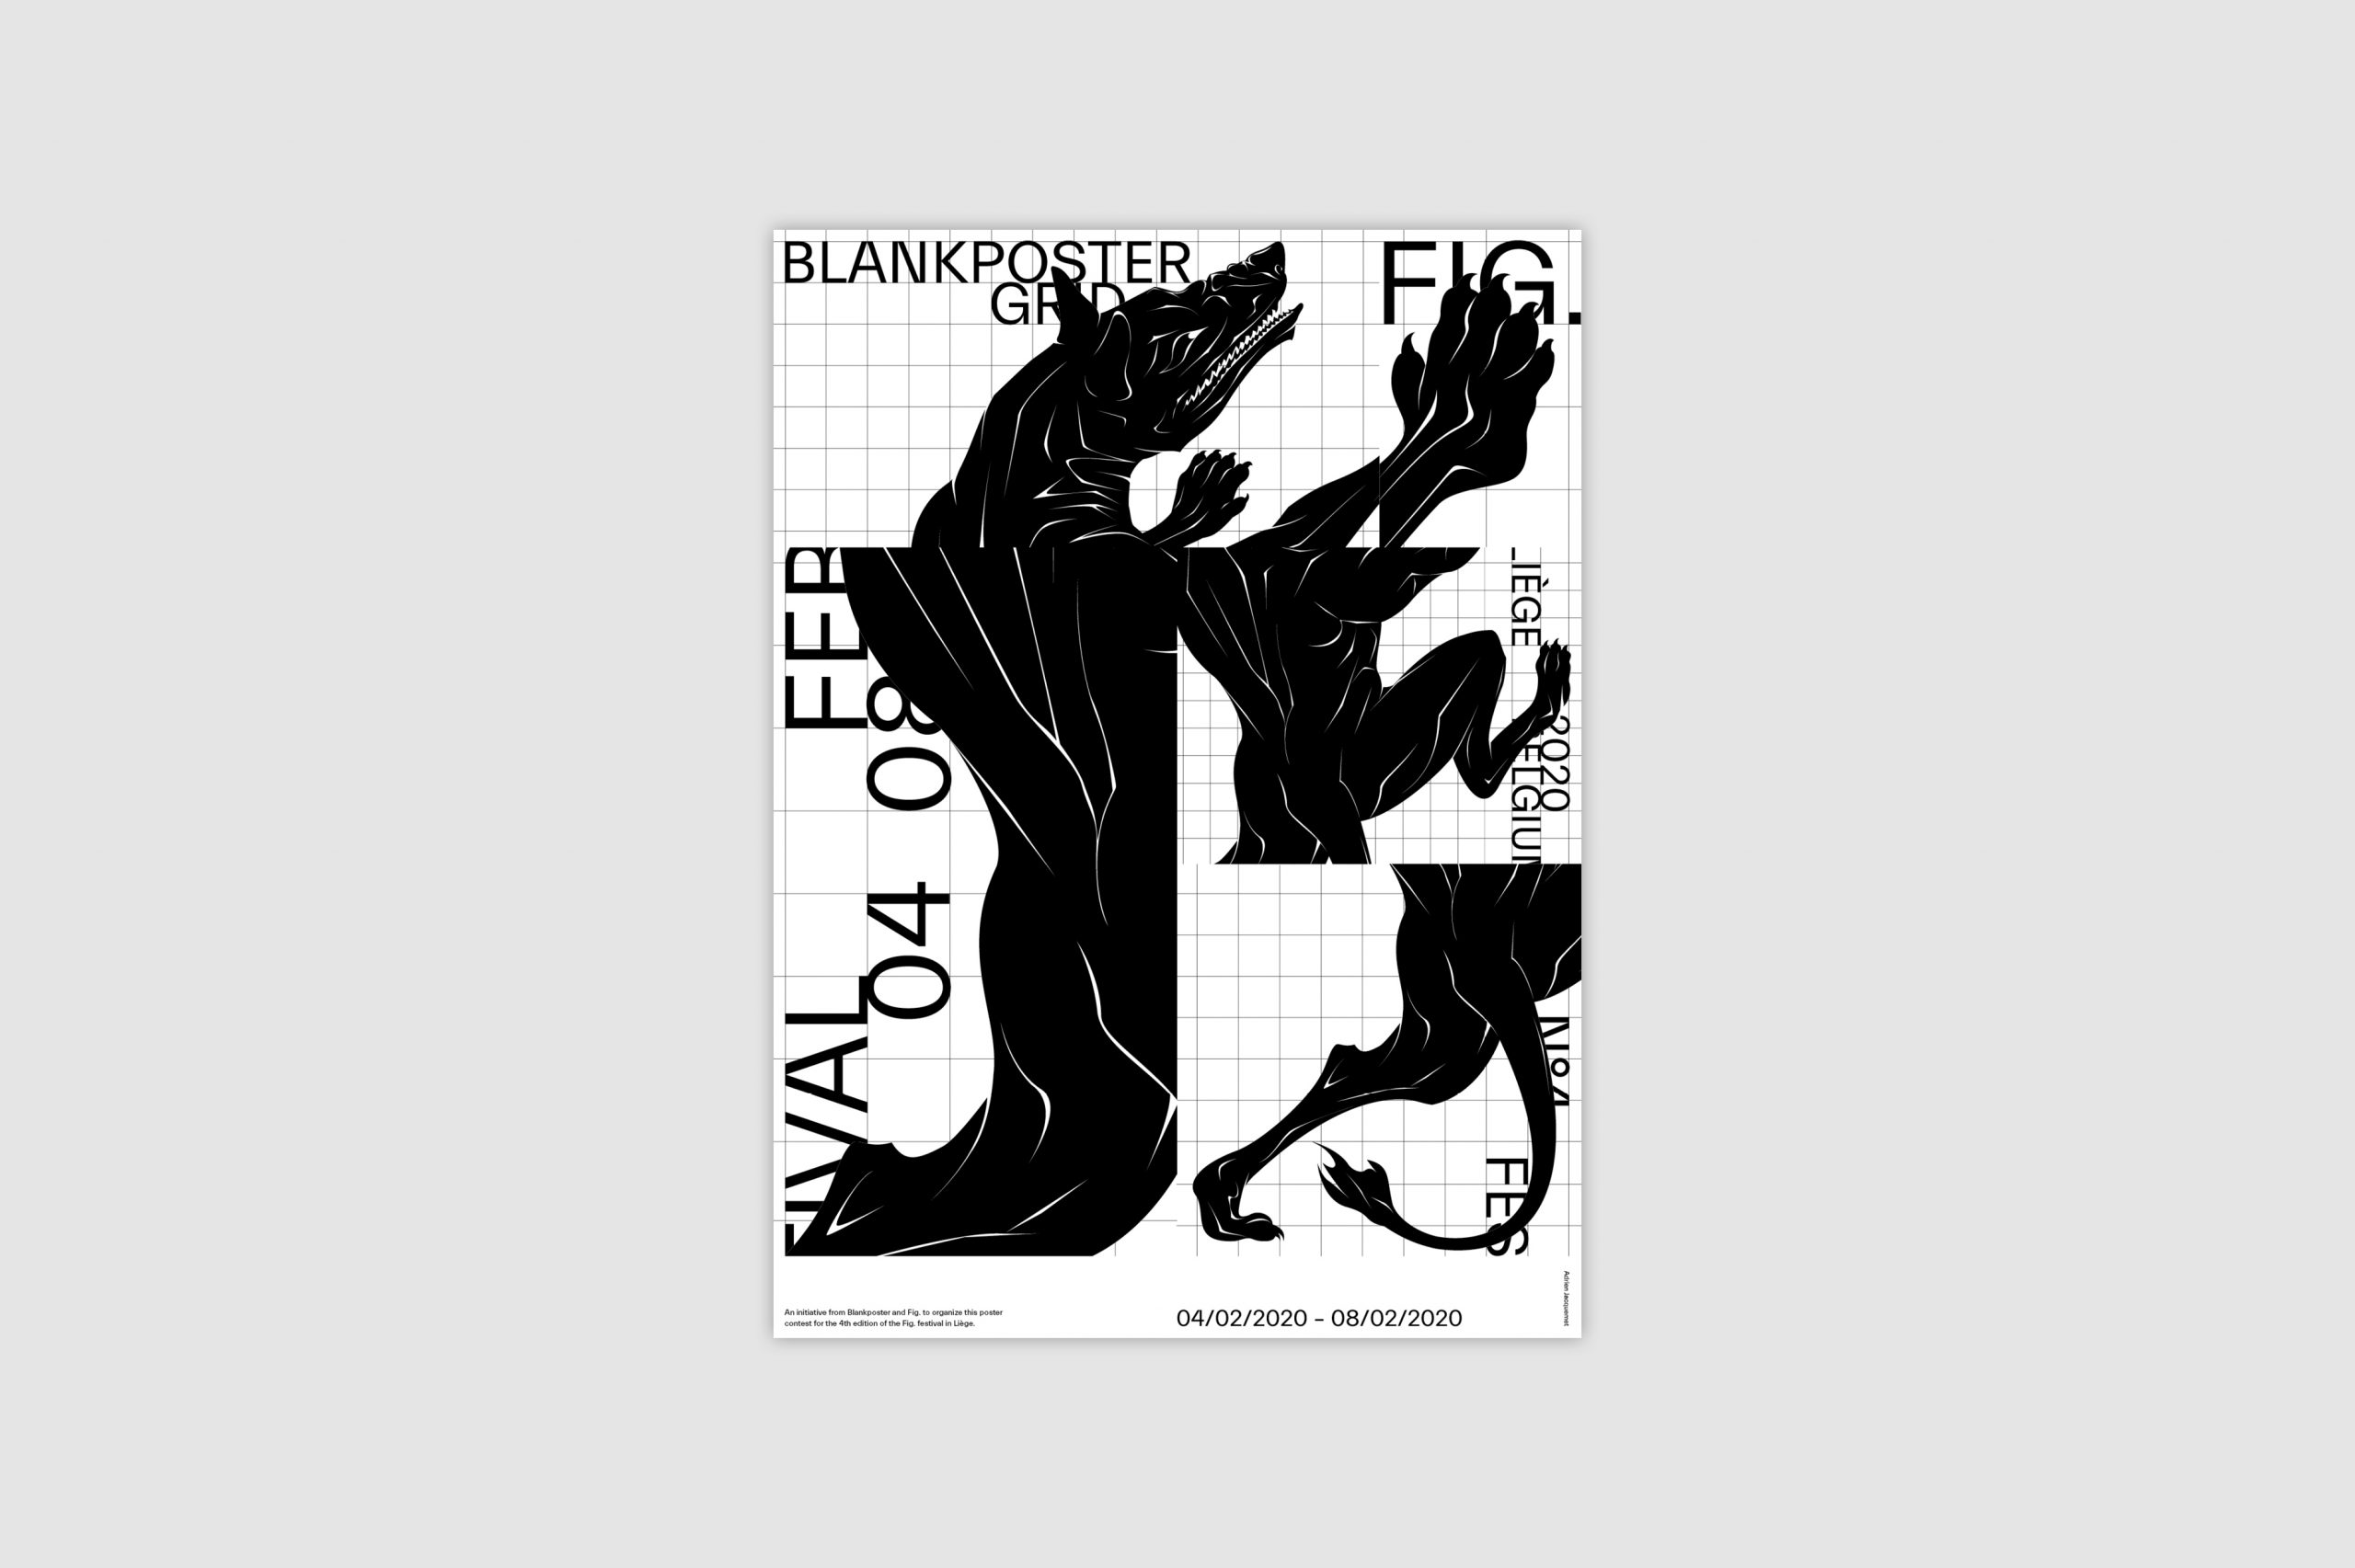 Blank poster & Fig. Liège 4, Grid, Poster by ©Adrien jacquemet graphic designer